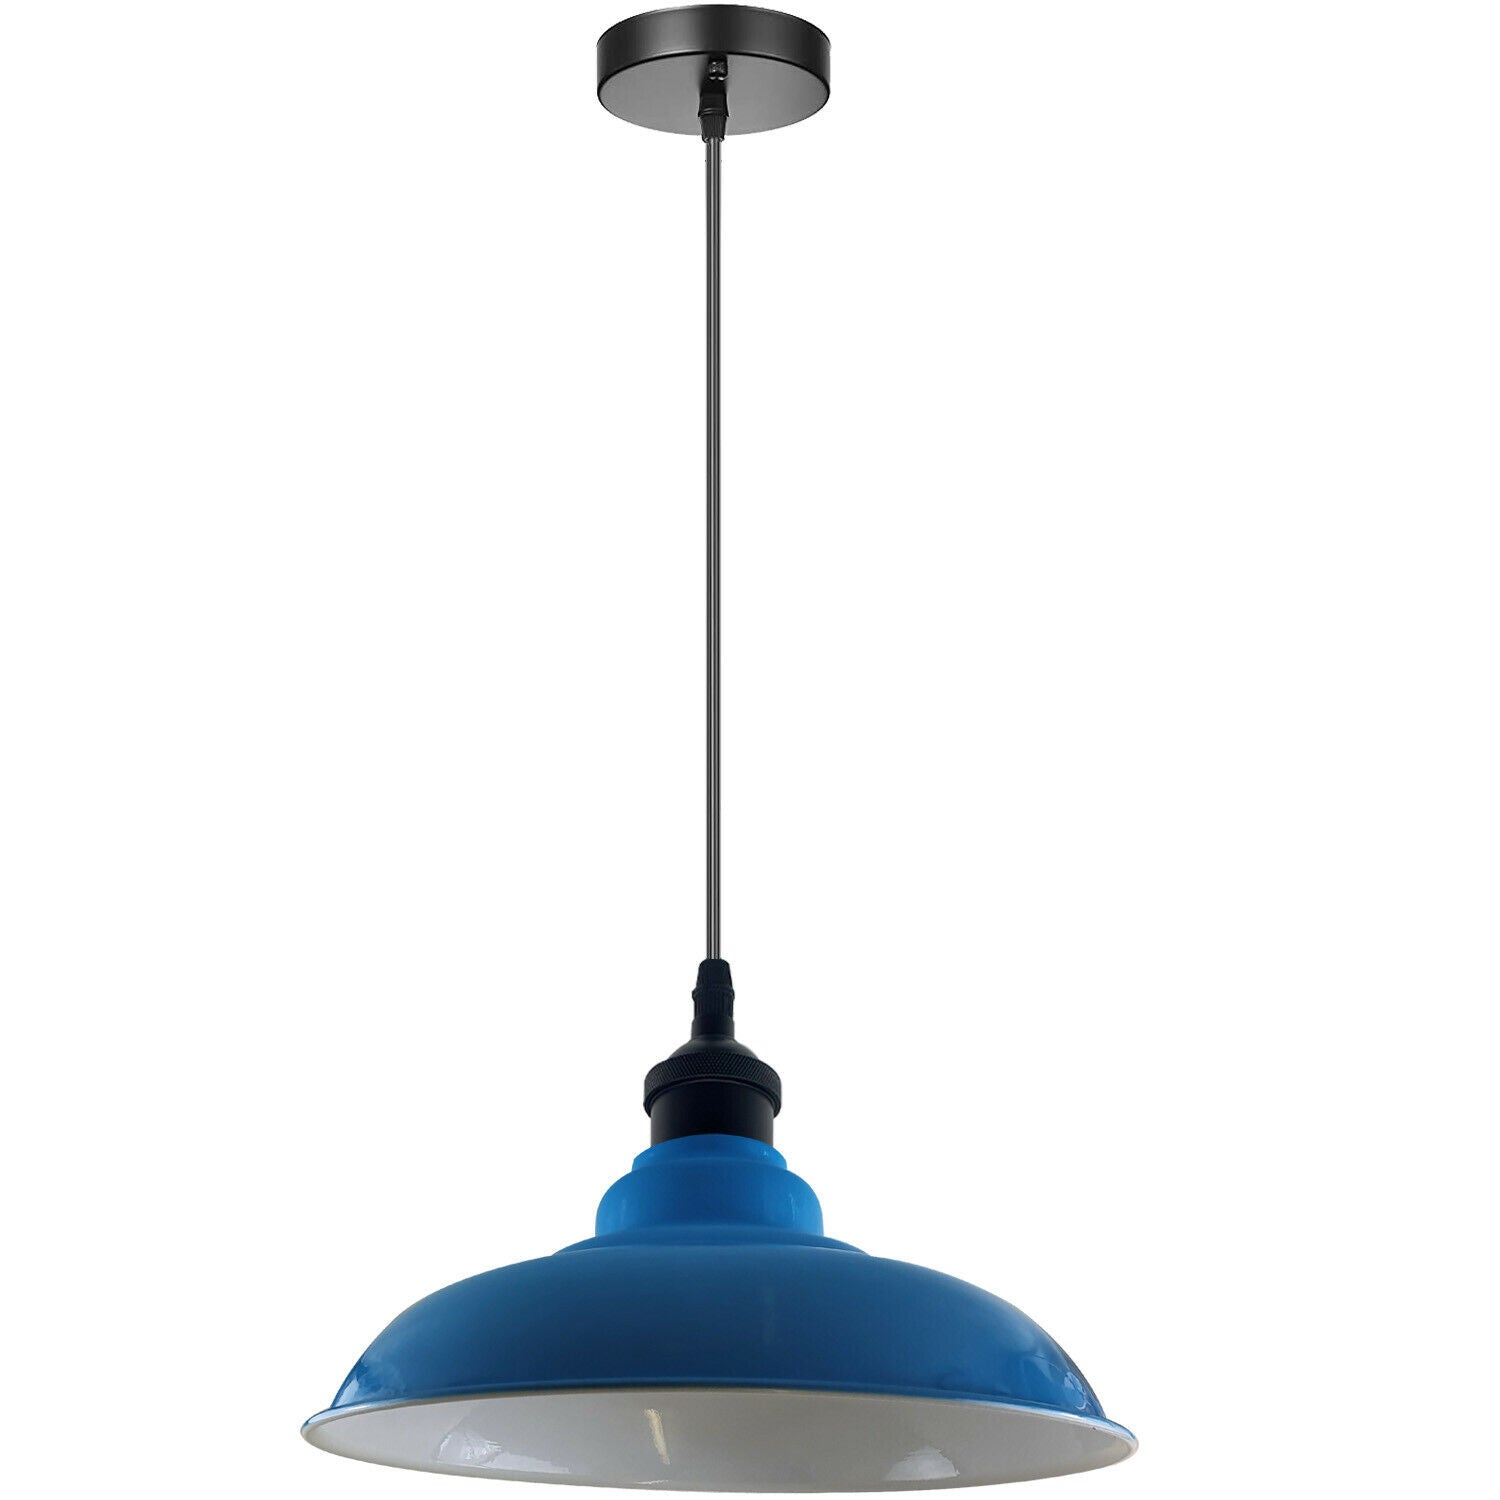 LEDSone industrial Vintage  32cm  Light Blue Pendant Retro Metal Lamp Shade E27 Uk Holder~3689 - LEDSone UK Ltd